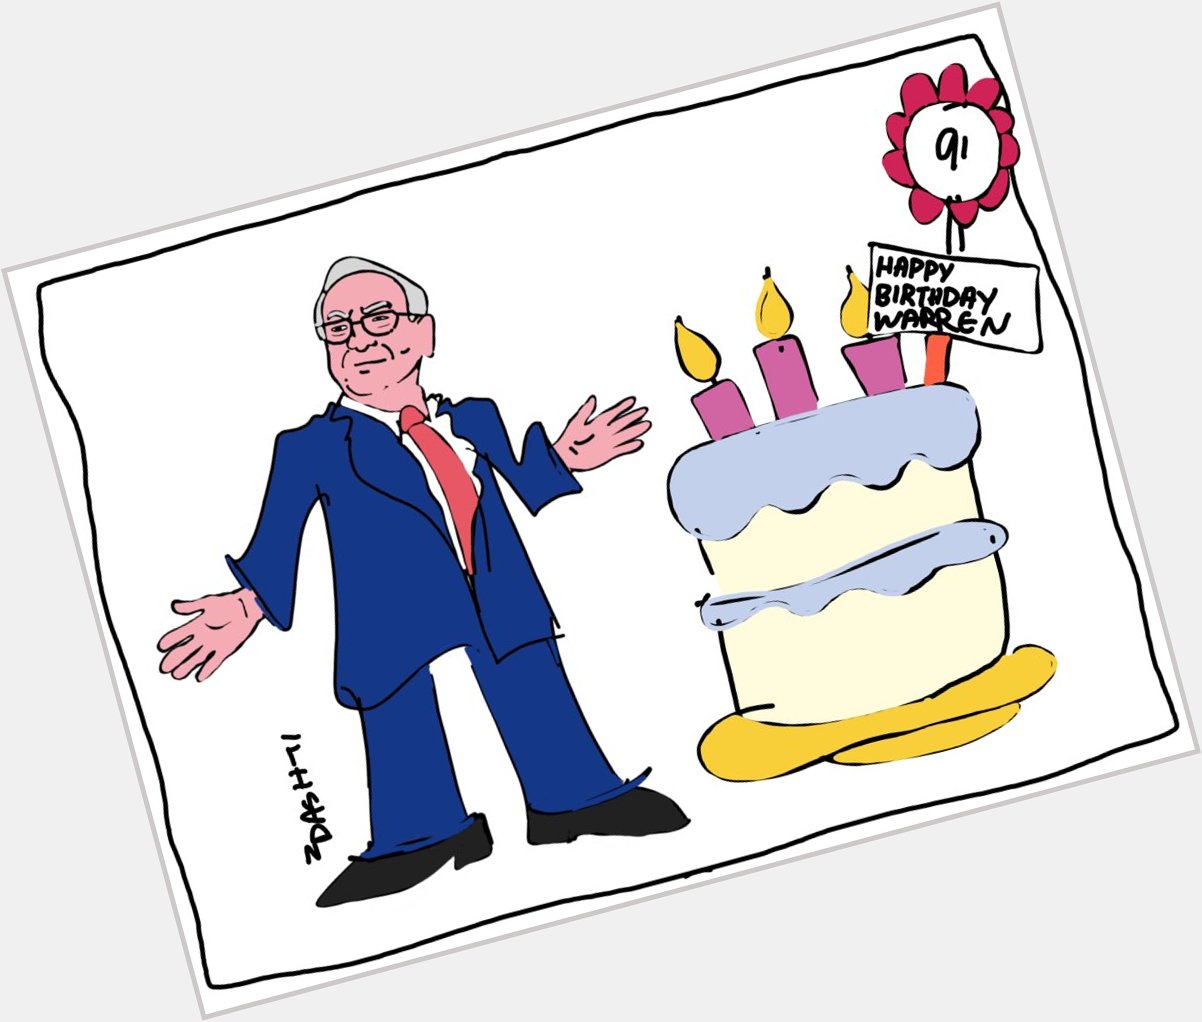 Happy birthday Warren Buffett 
91 years old
30 August 1930    